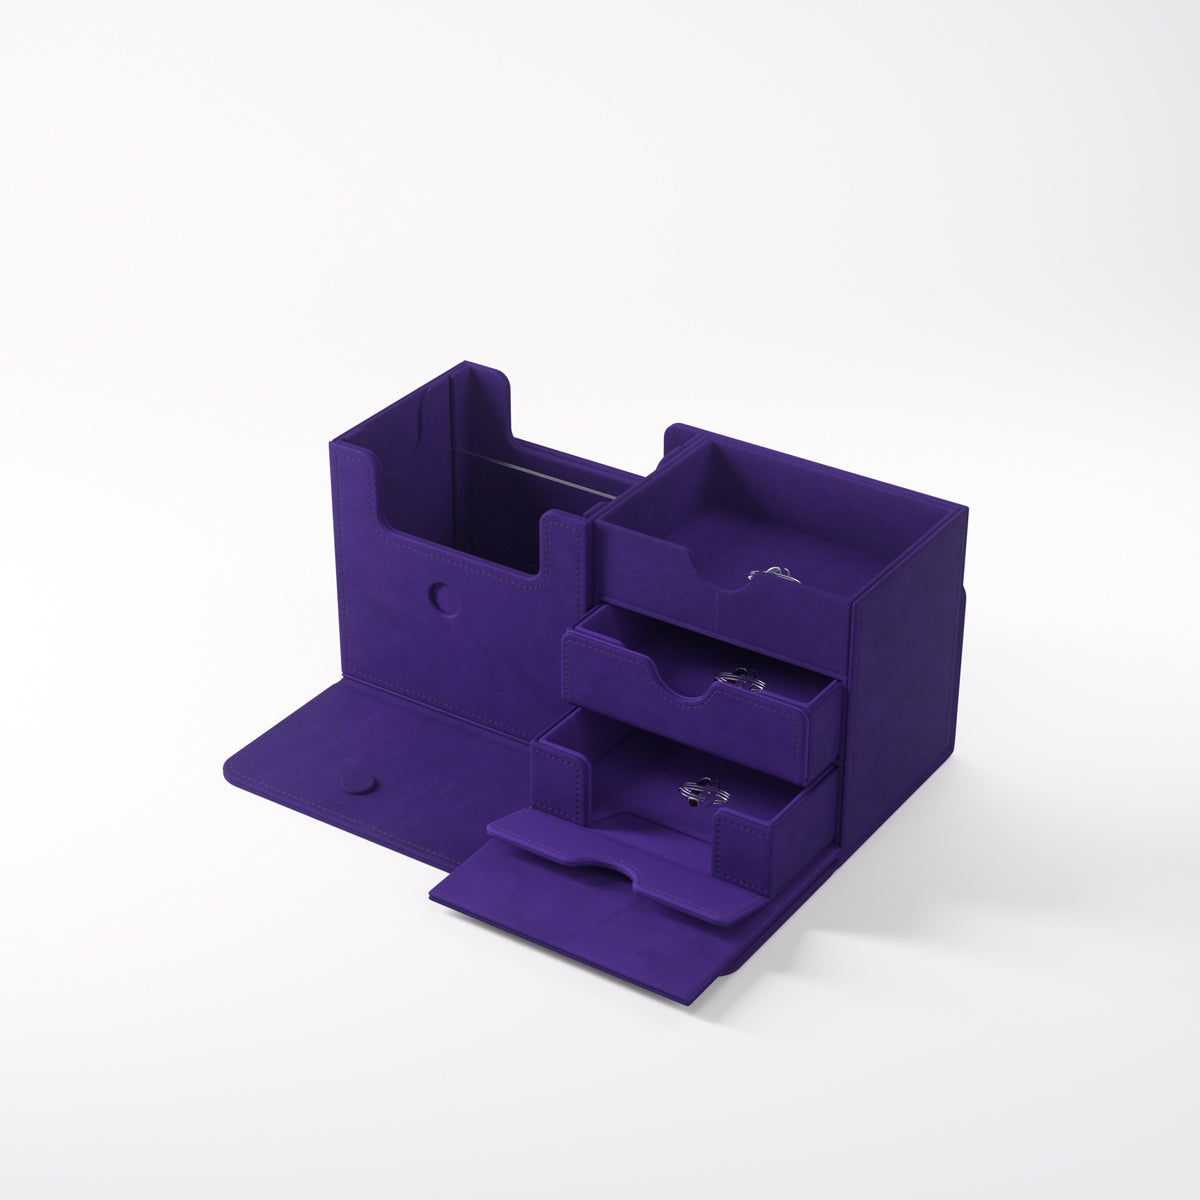 The Academic 133+ XL Convertible Purple/Purple Deck Box (133ct)